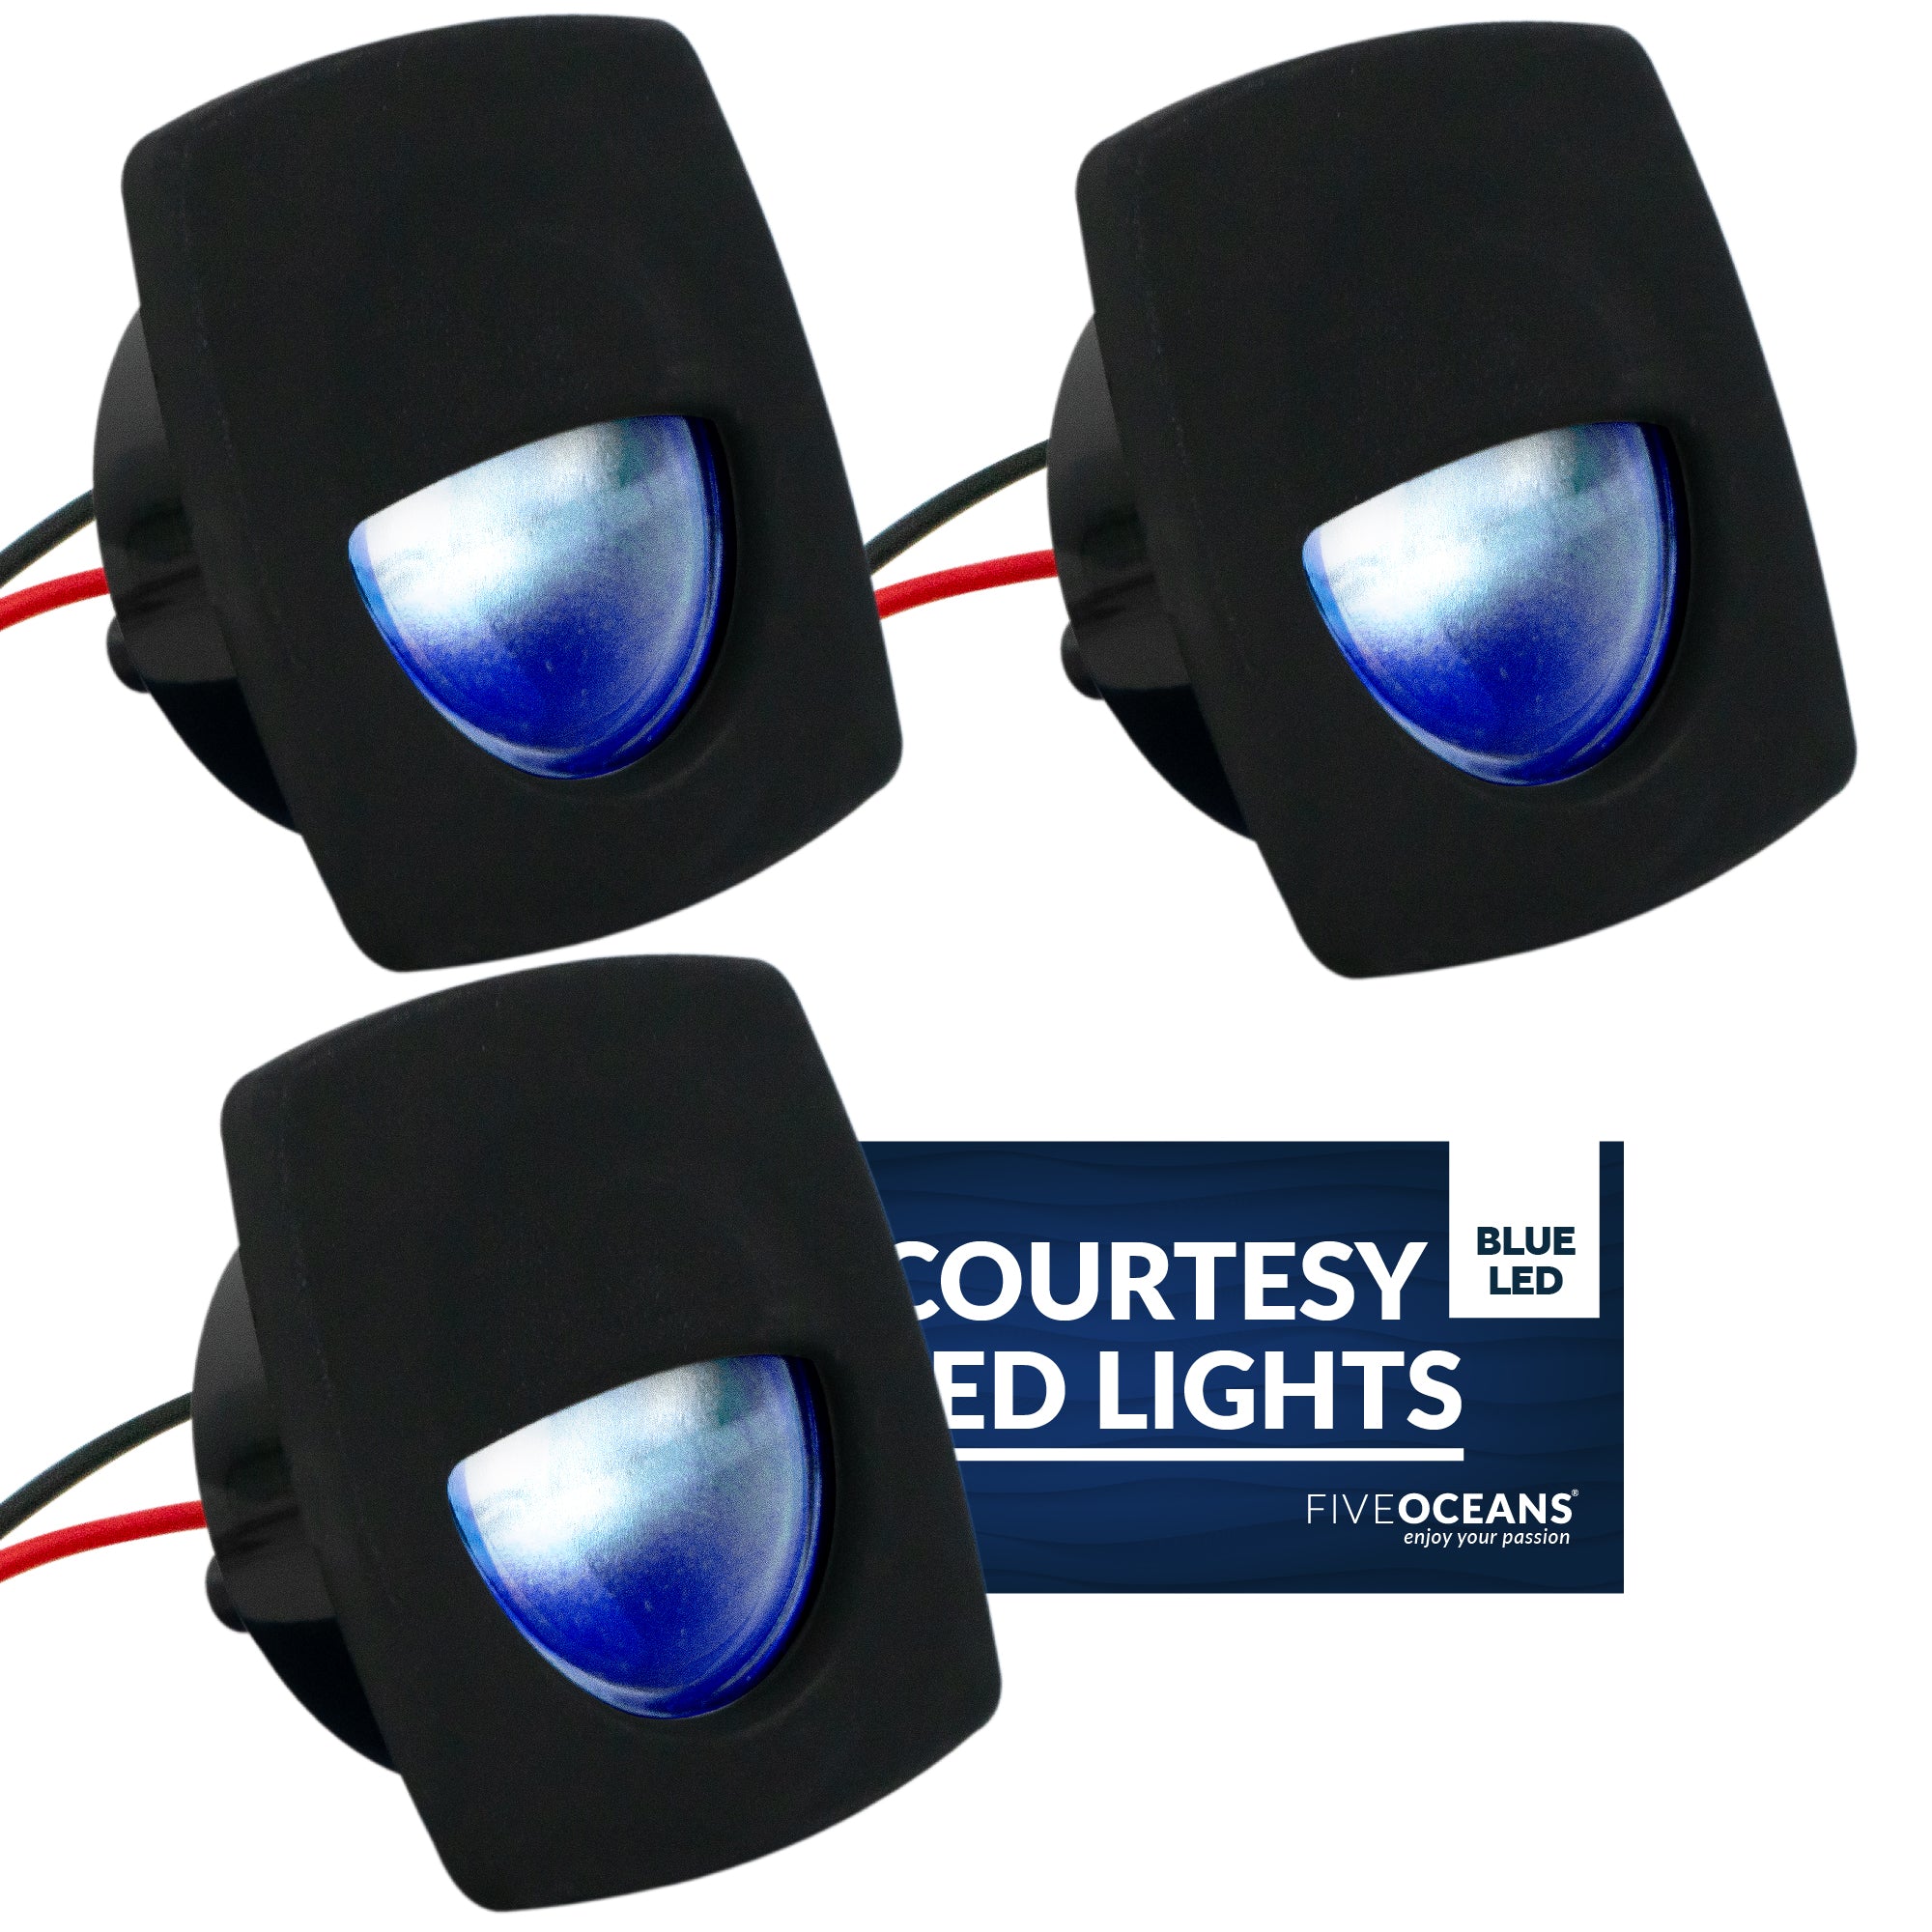 LED Courtesy Companion Way Light, Square, Blue light, 3-pack - FO4002-M3